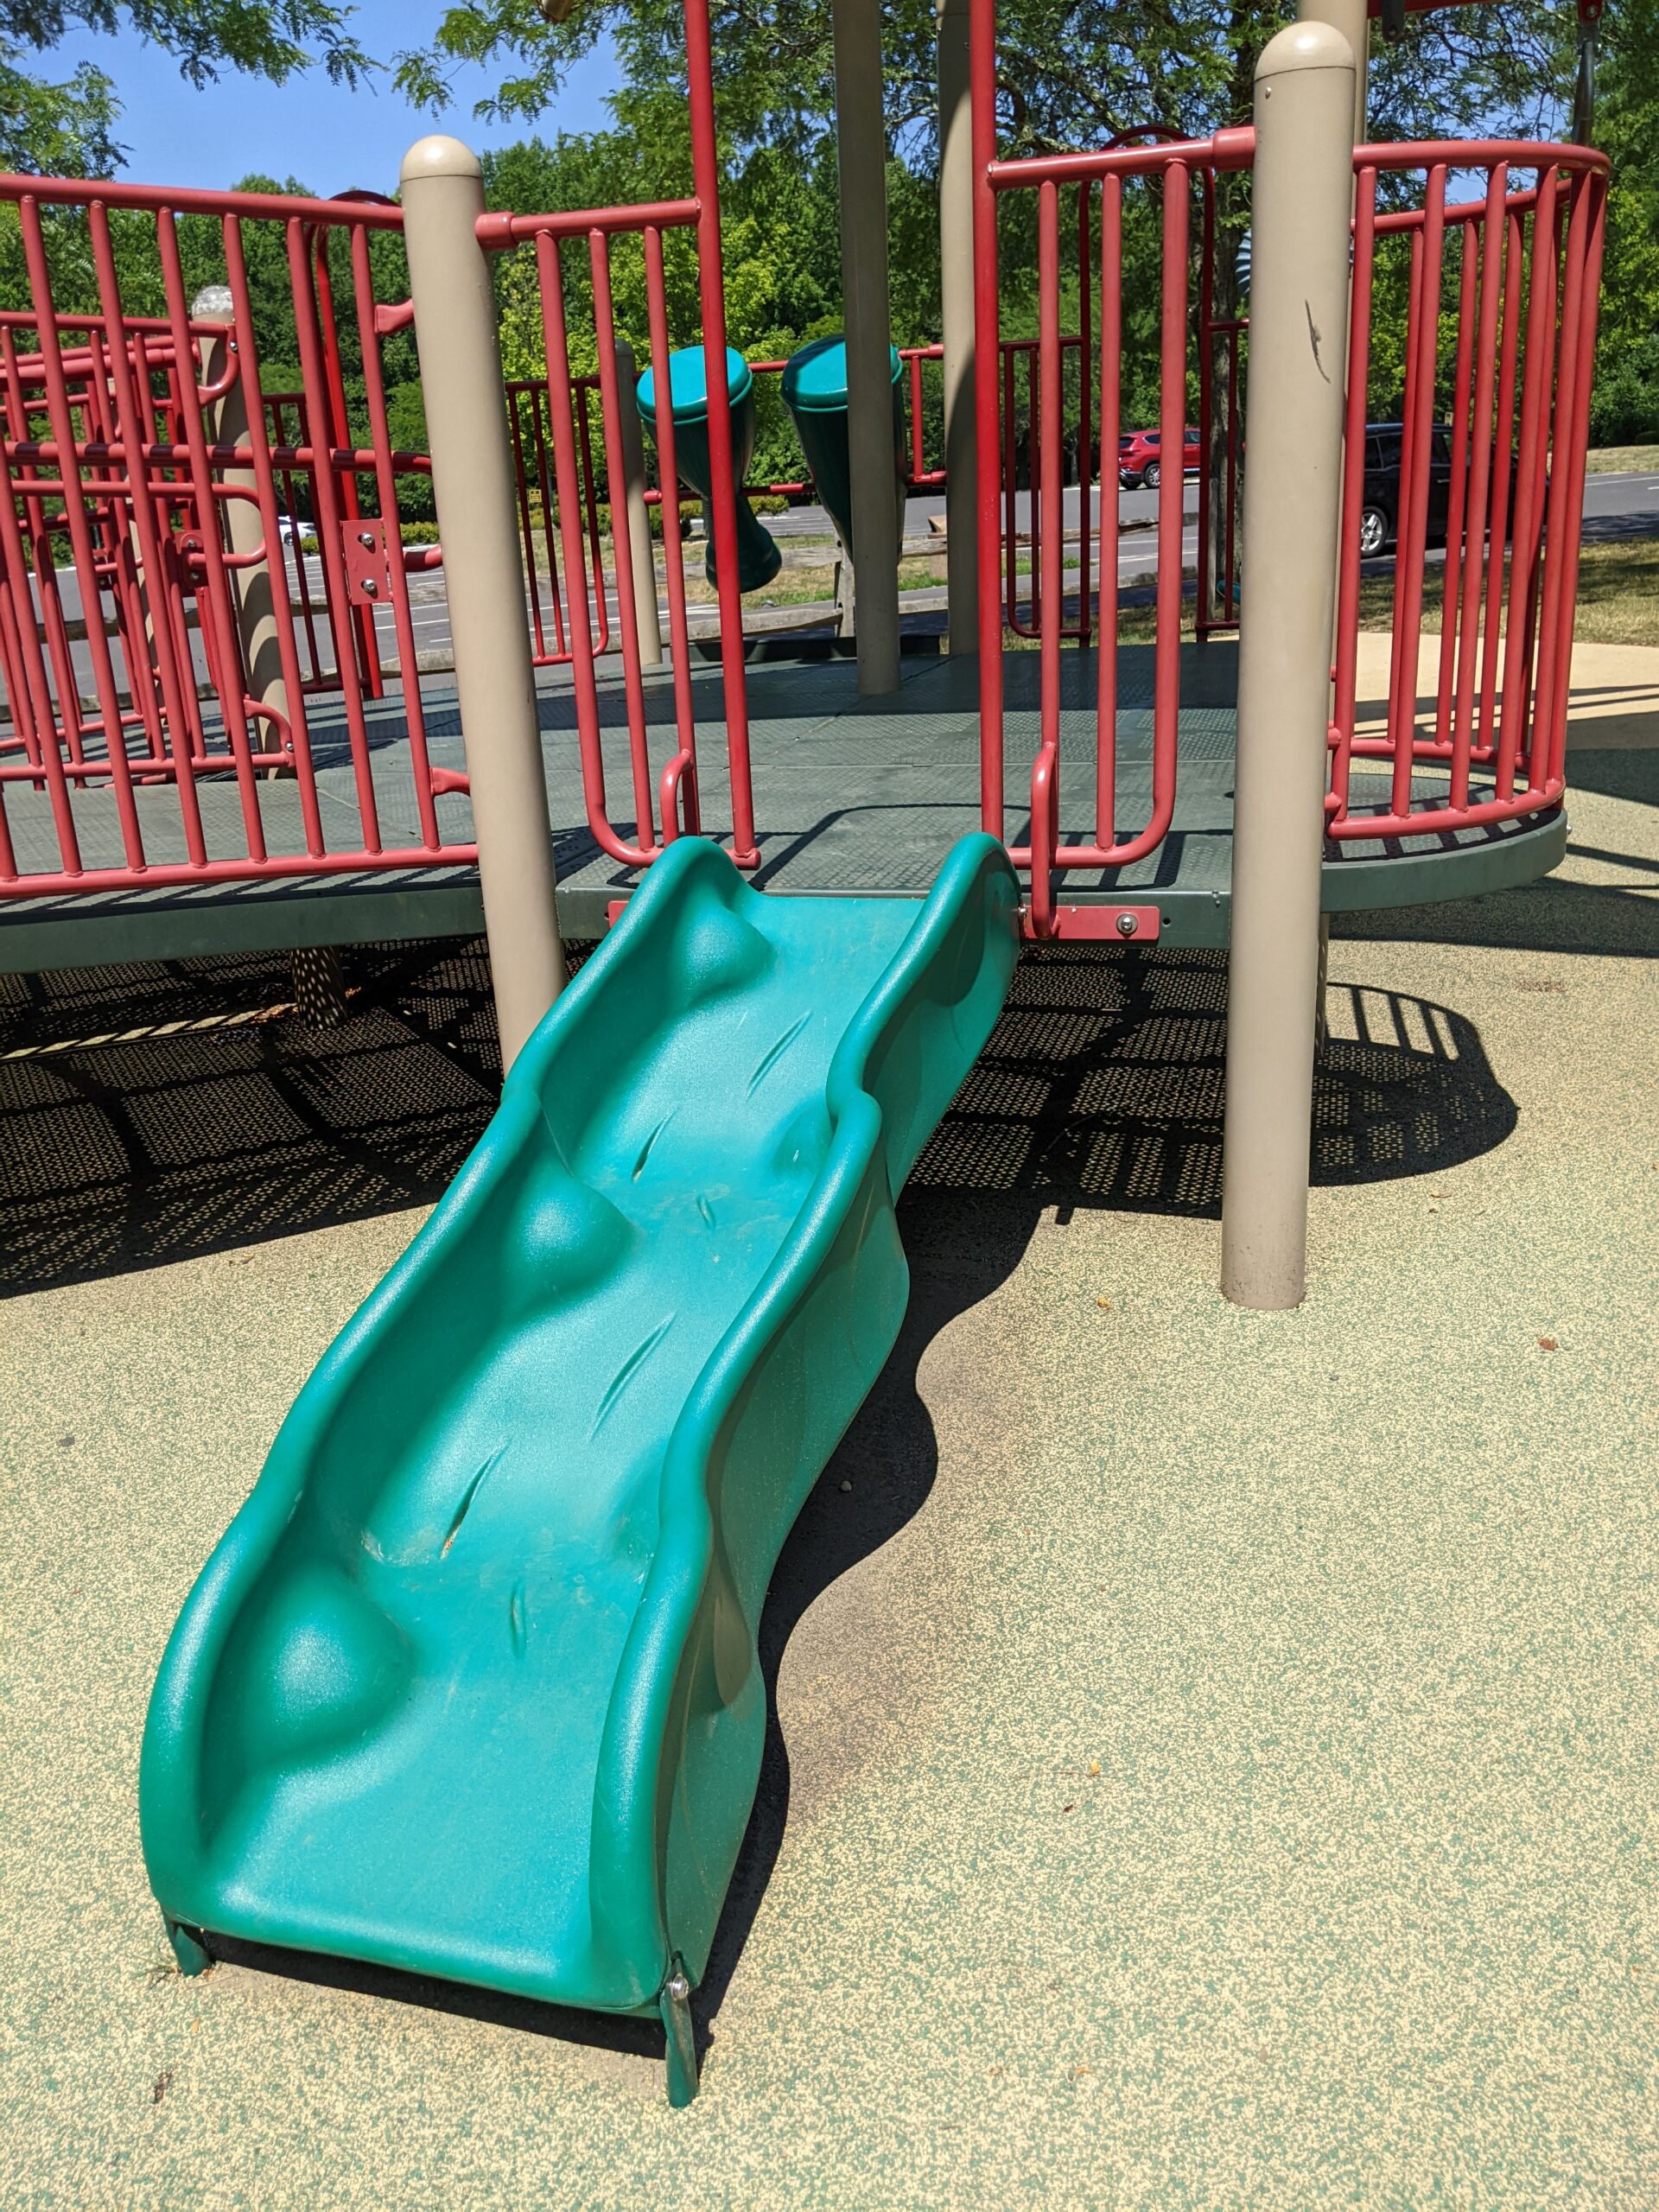 Children's Park Playground at Veteran's Park in Hamilton Township NJ - SLIDES - wavy slide on new playground